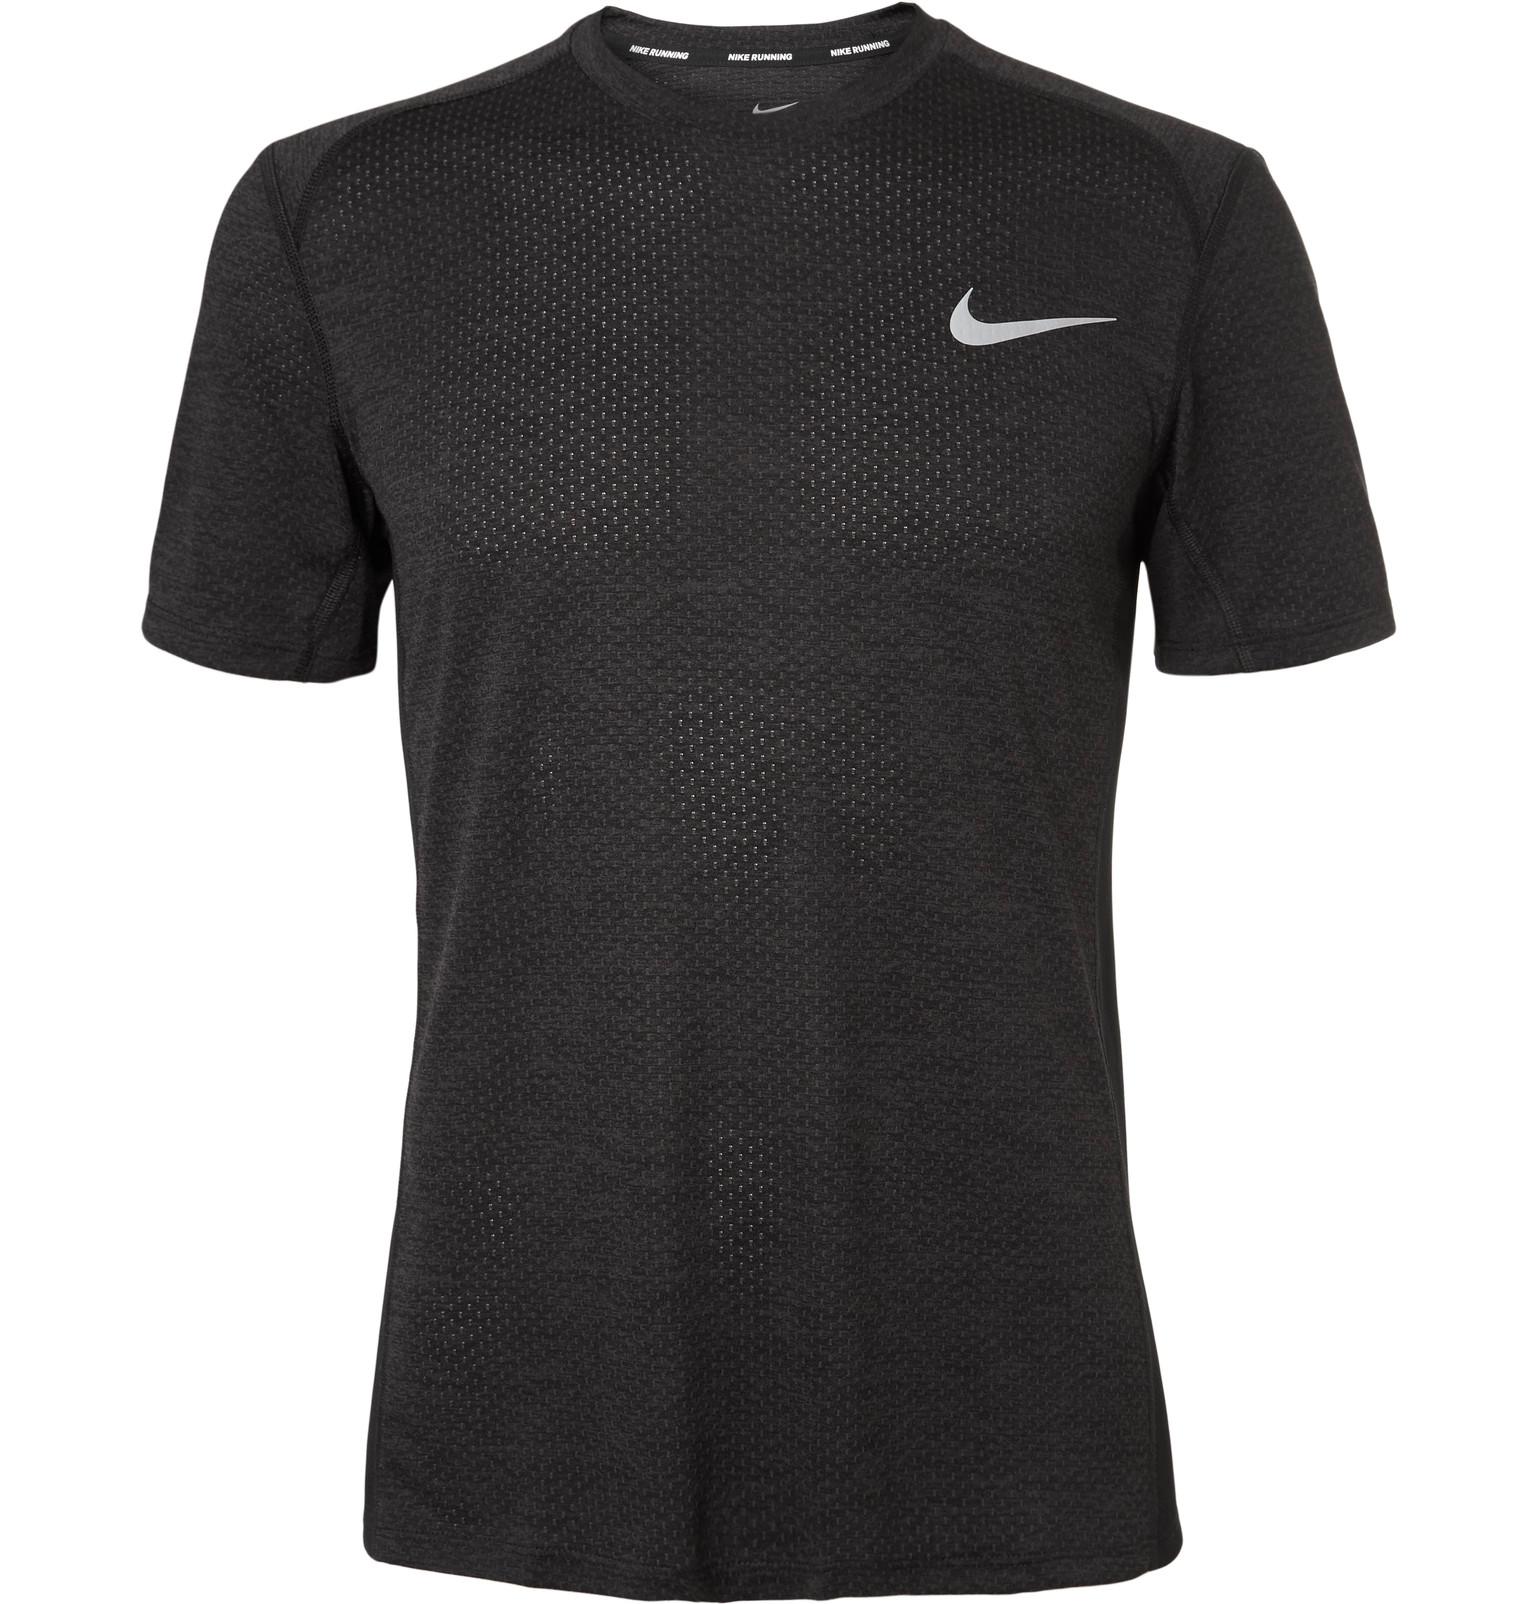 Nike Synthetic Breathe Miler Dri-fit T-shirt in Black for Men - Lyst